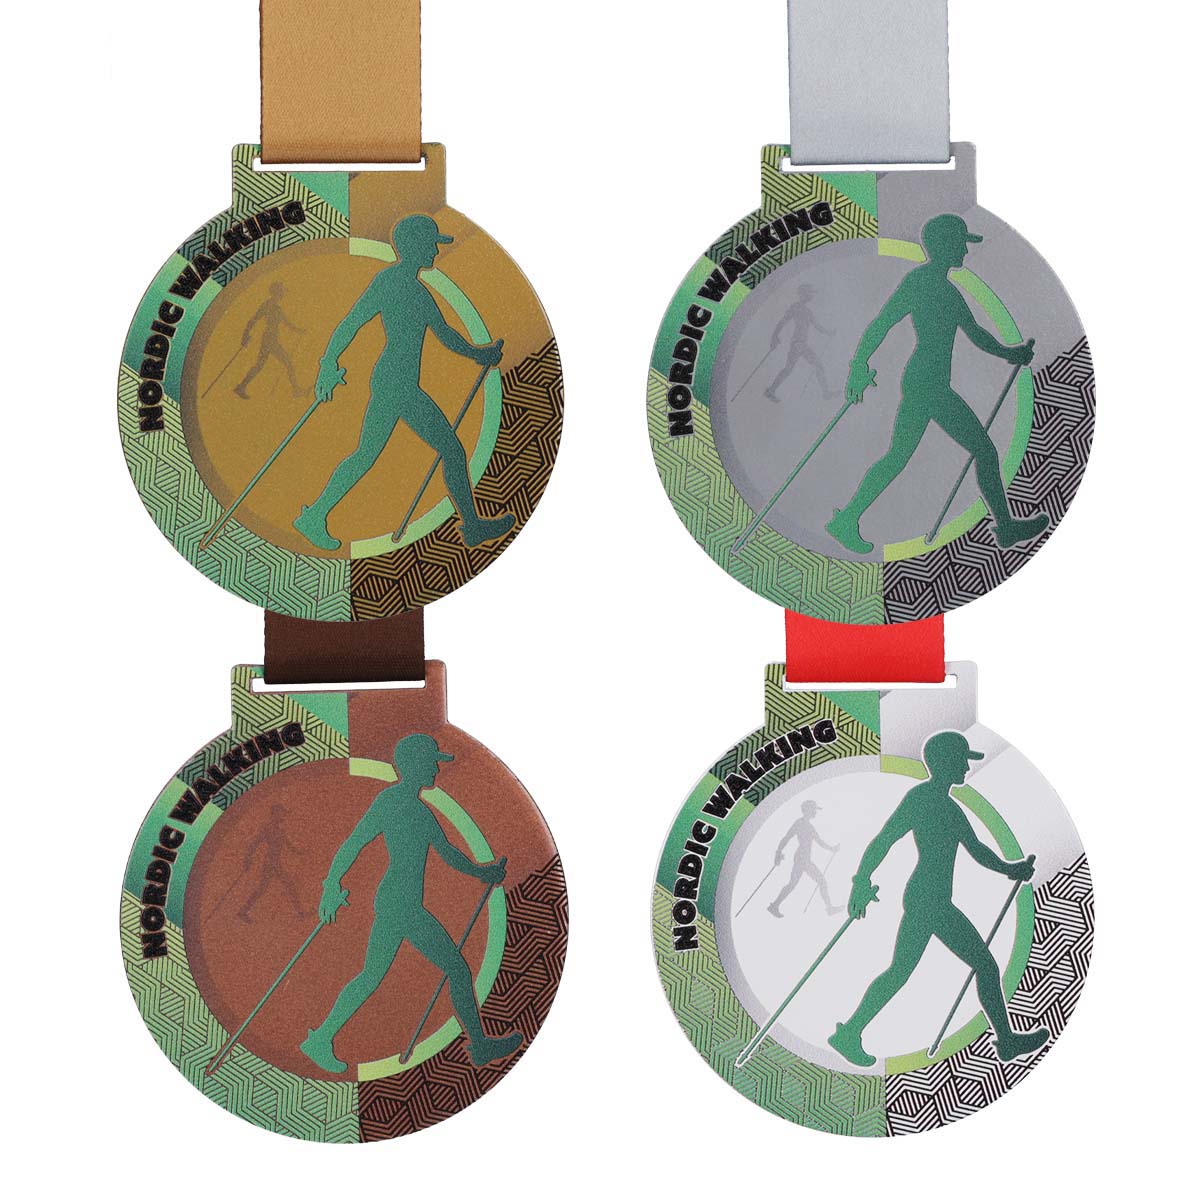 zestaw medali nordic walking kolory